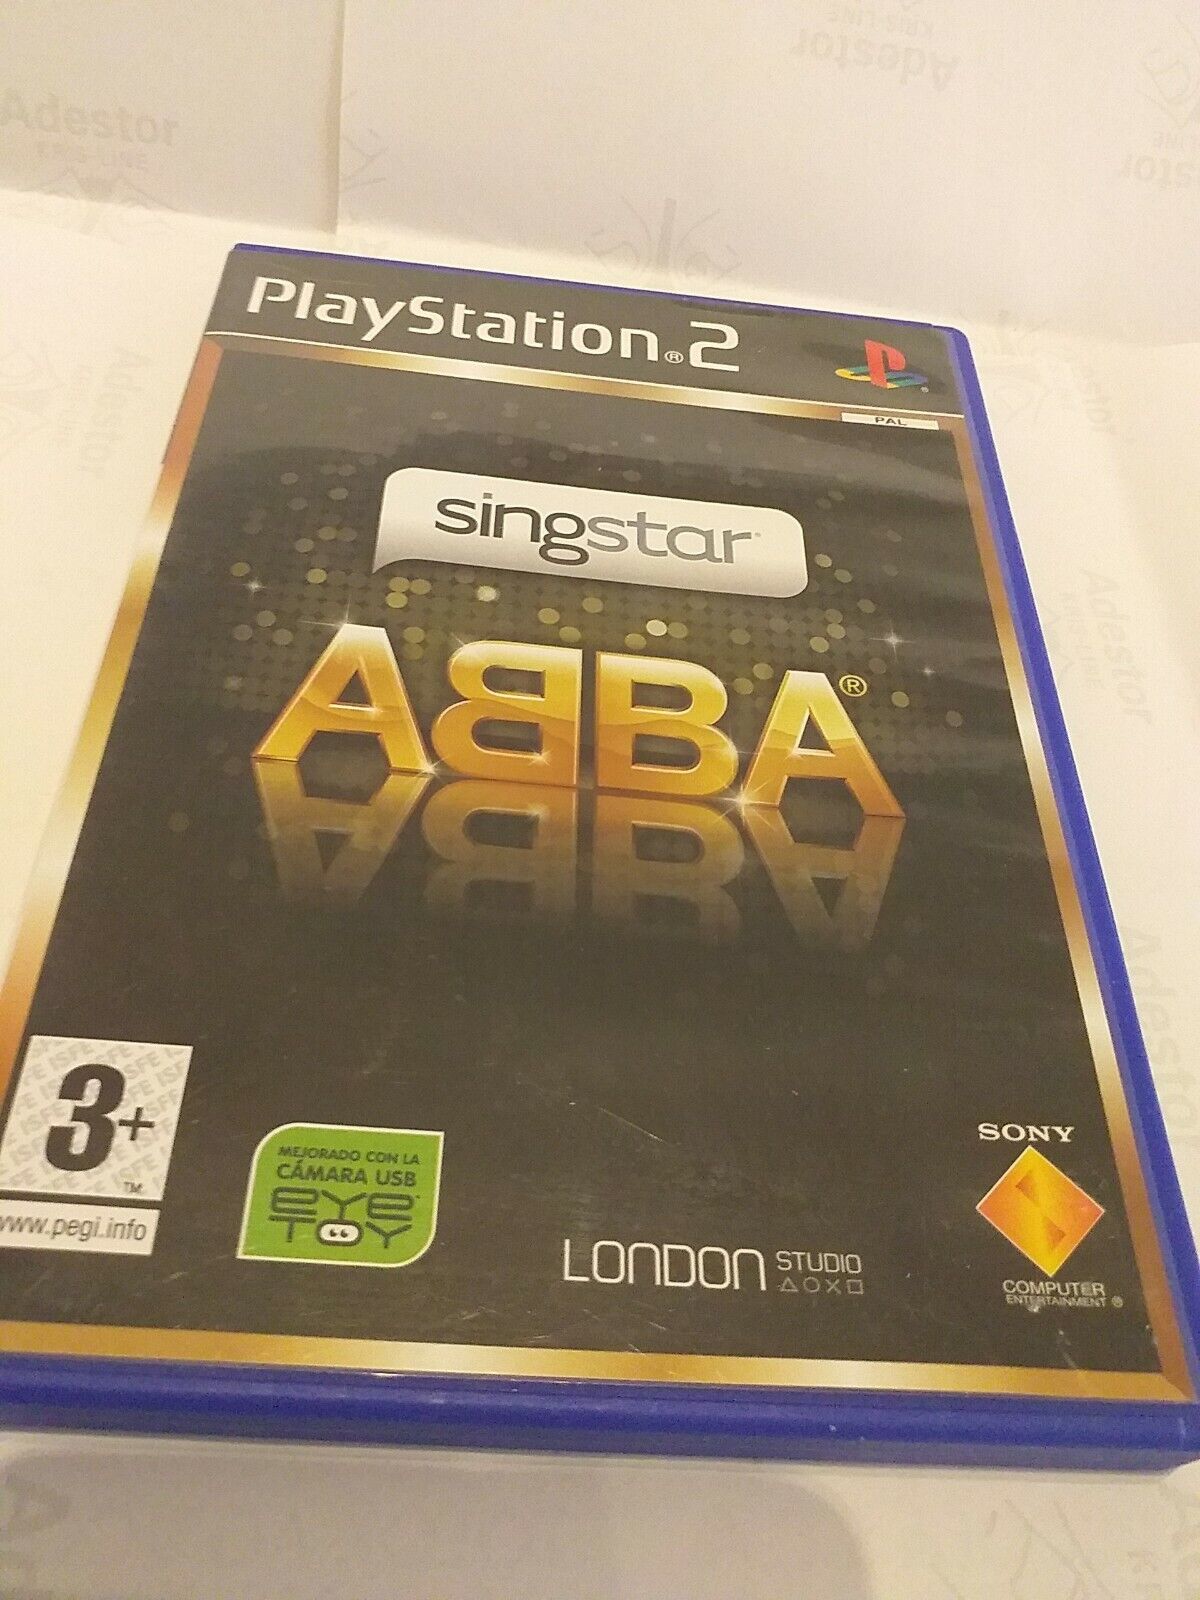 alma Júnior Cuna Ps2 singstar ABBA ☆pal españa playstation 2/completo | eBay